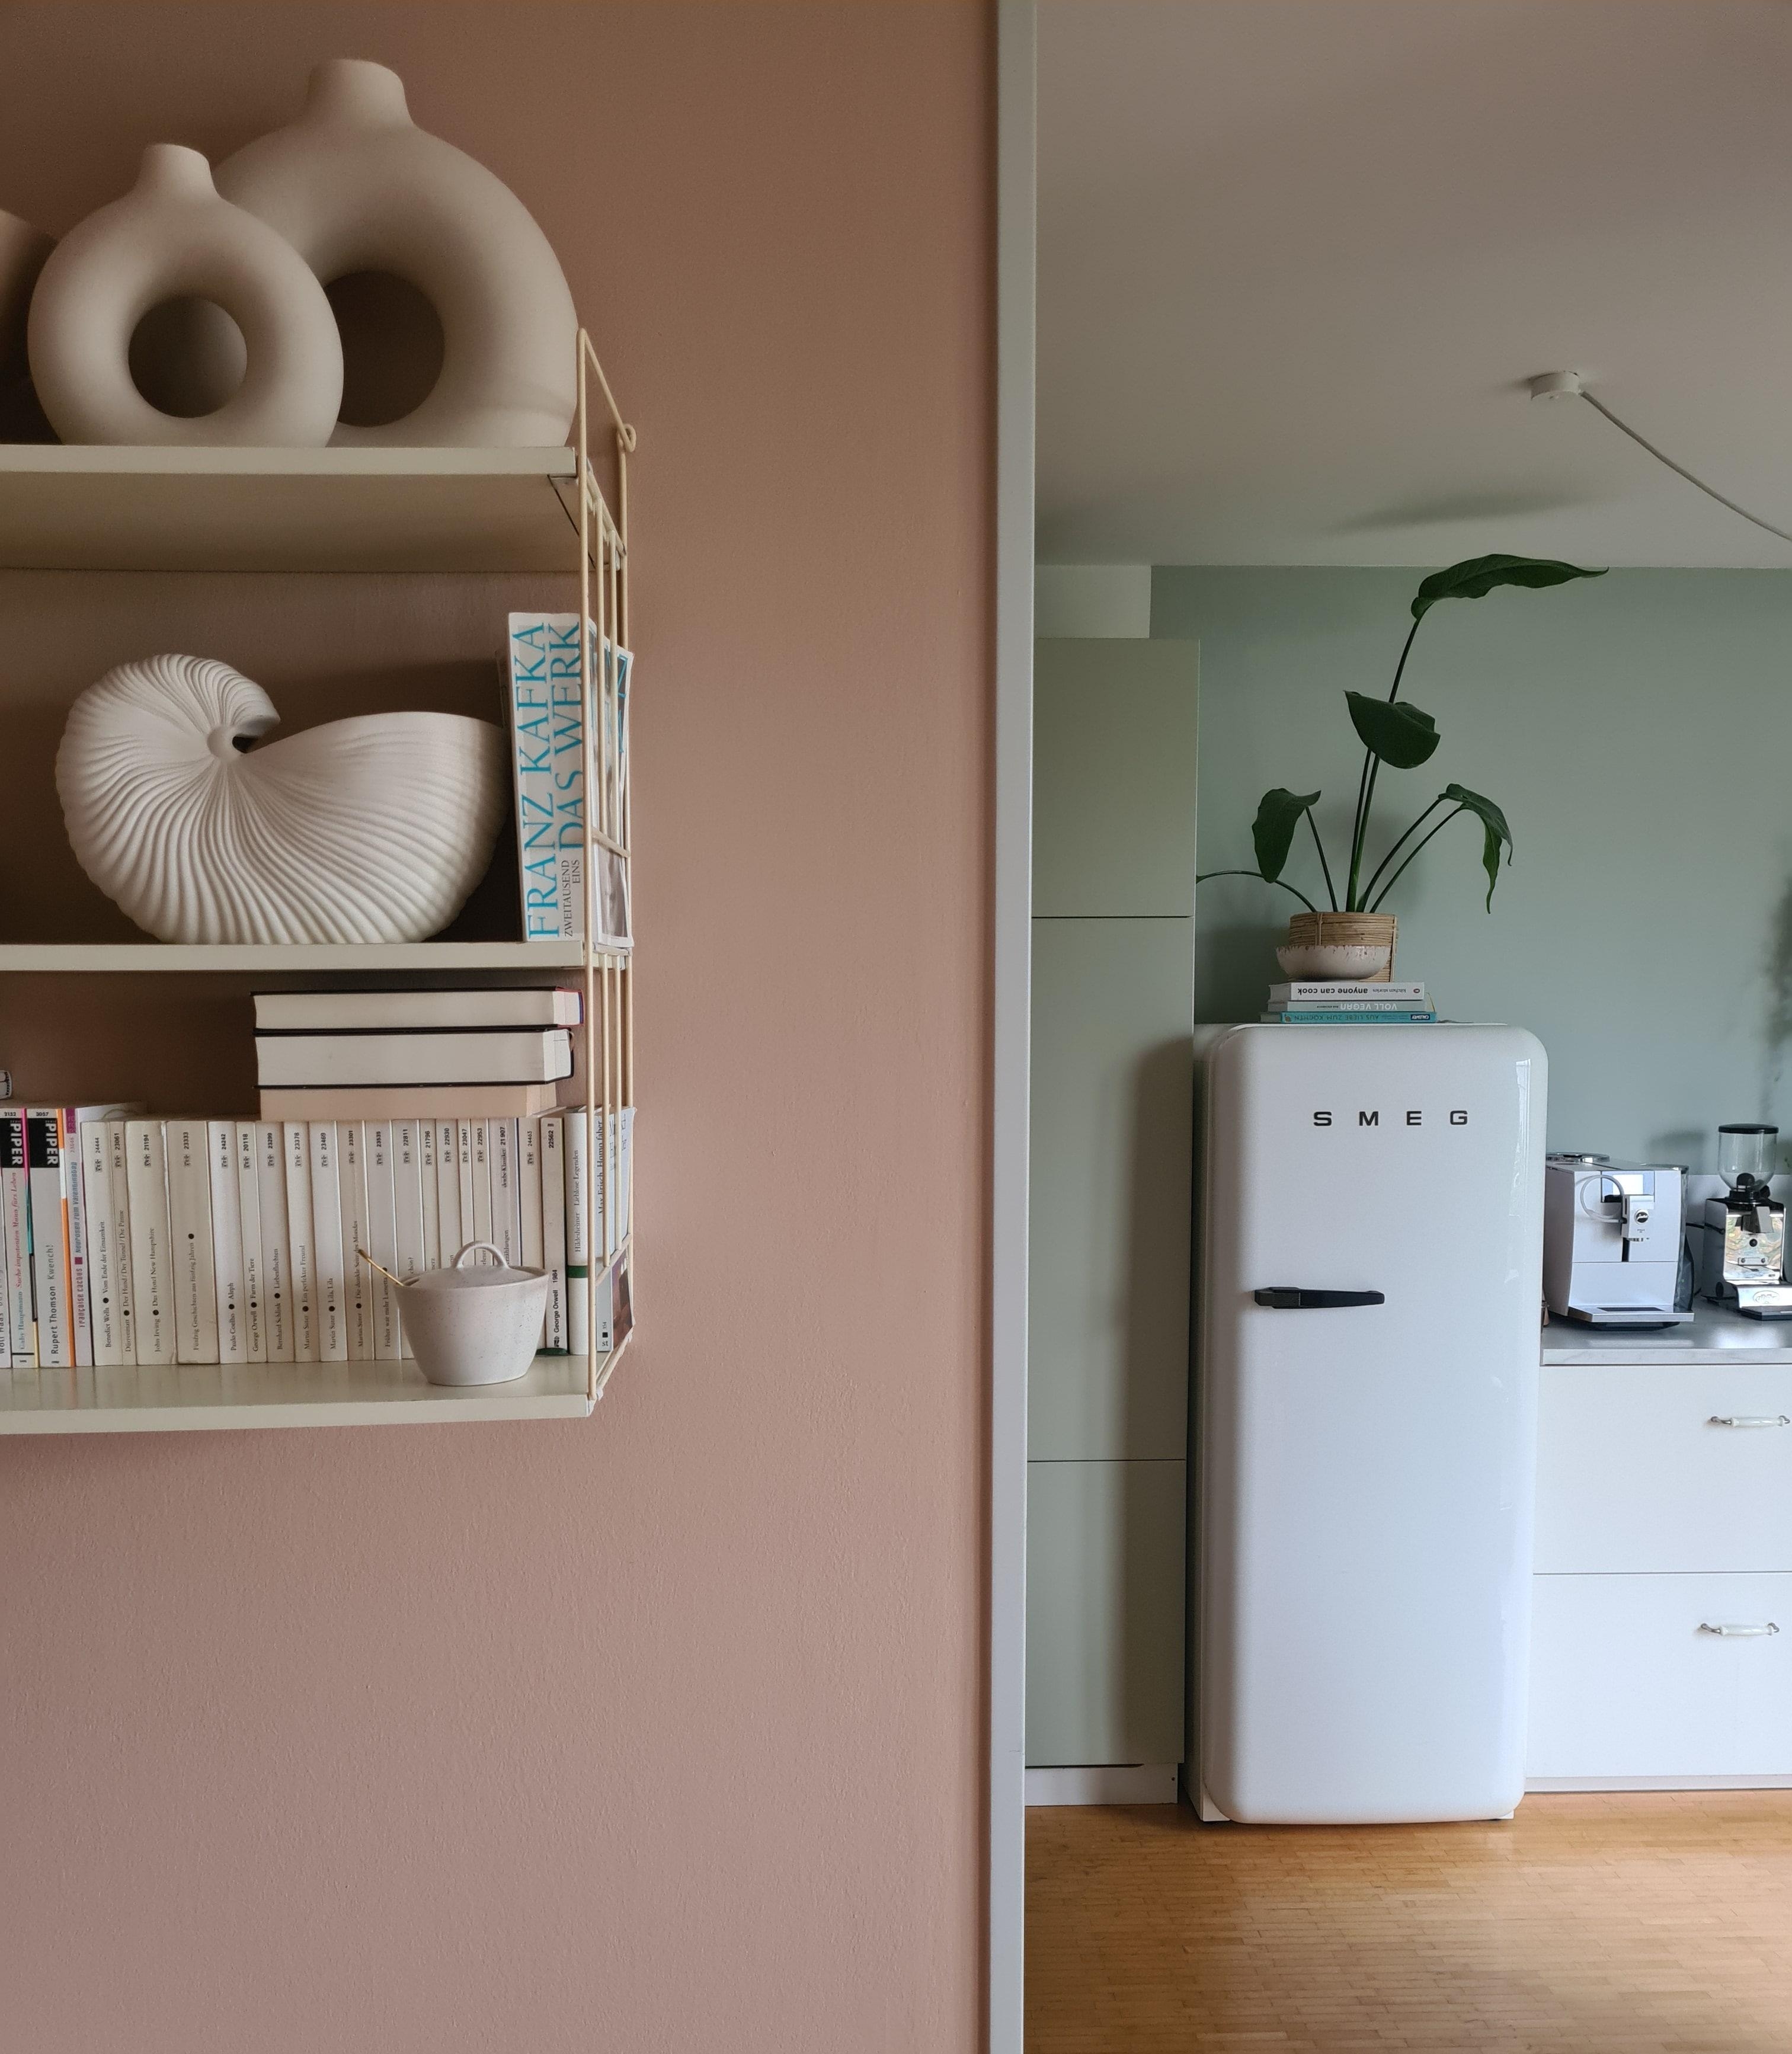 Home ♥️
#küche #kühlschrank #wandfarbe #wandregal #vasen #kaffeemaschine 